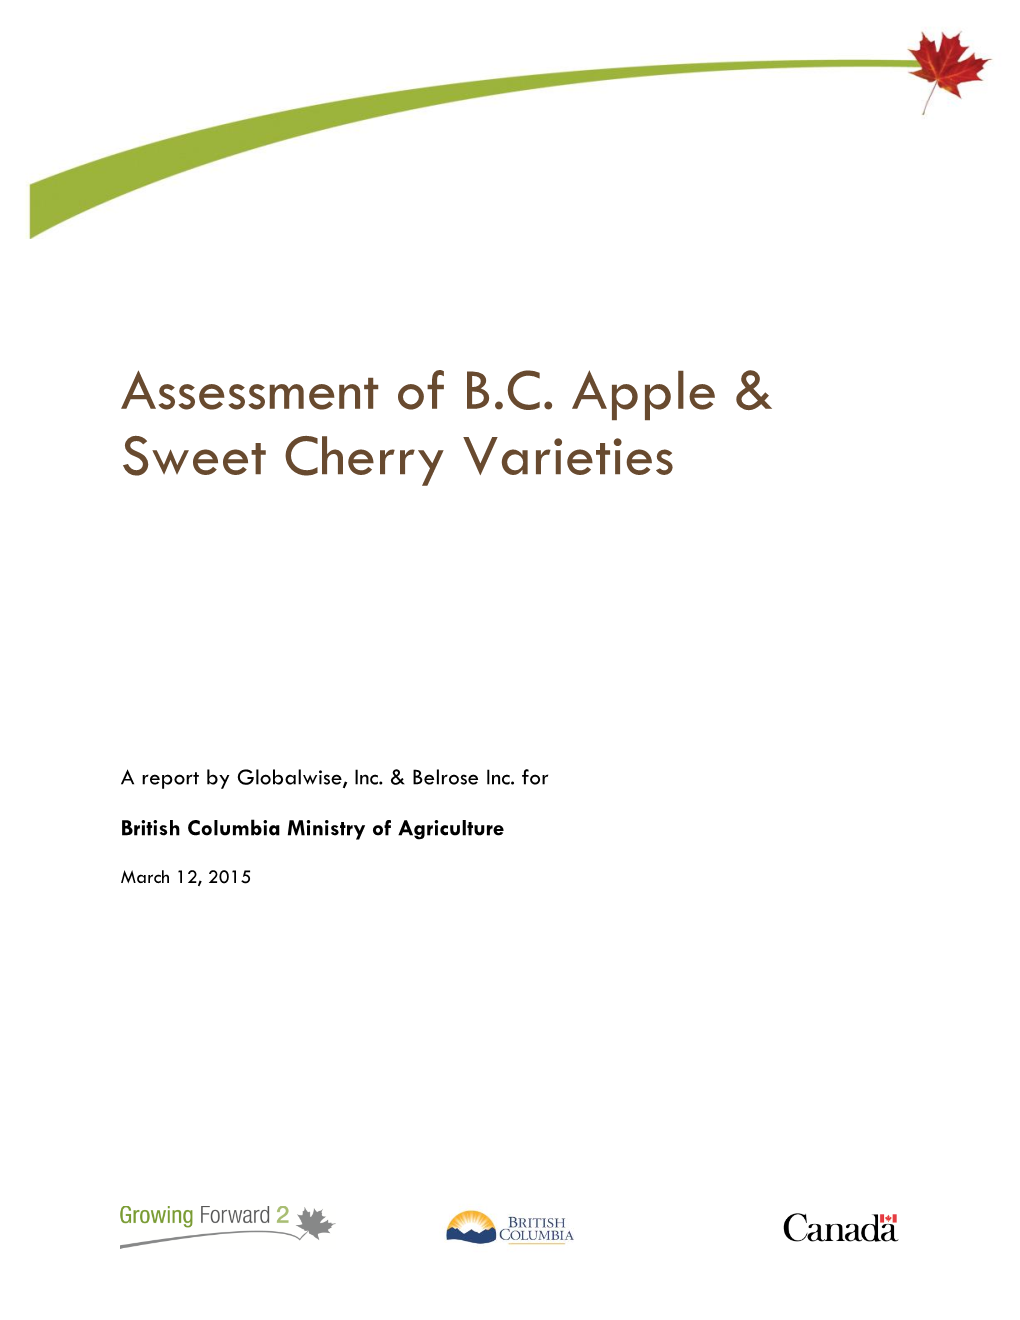 Assessment of B.C. Apple & Sweet Cherry Varieties